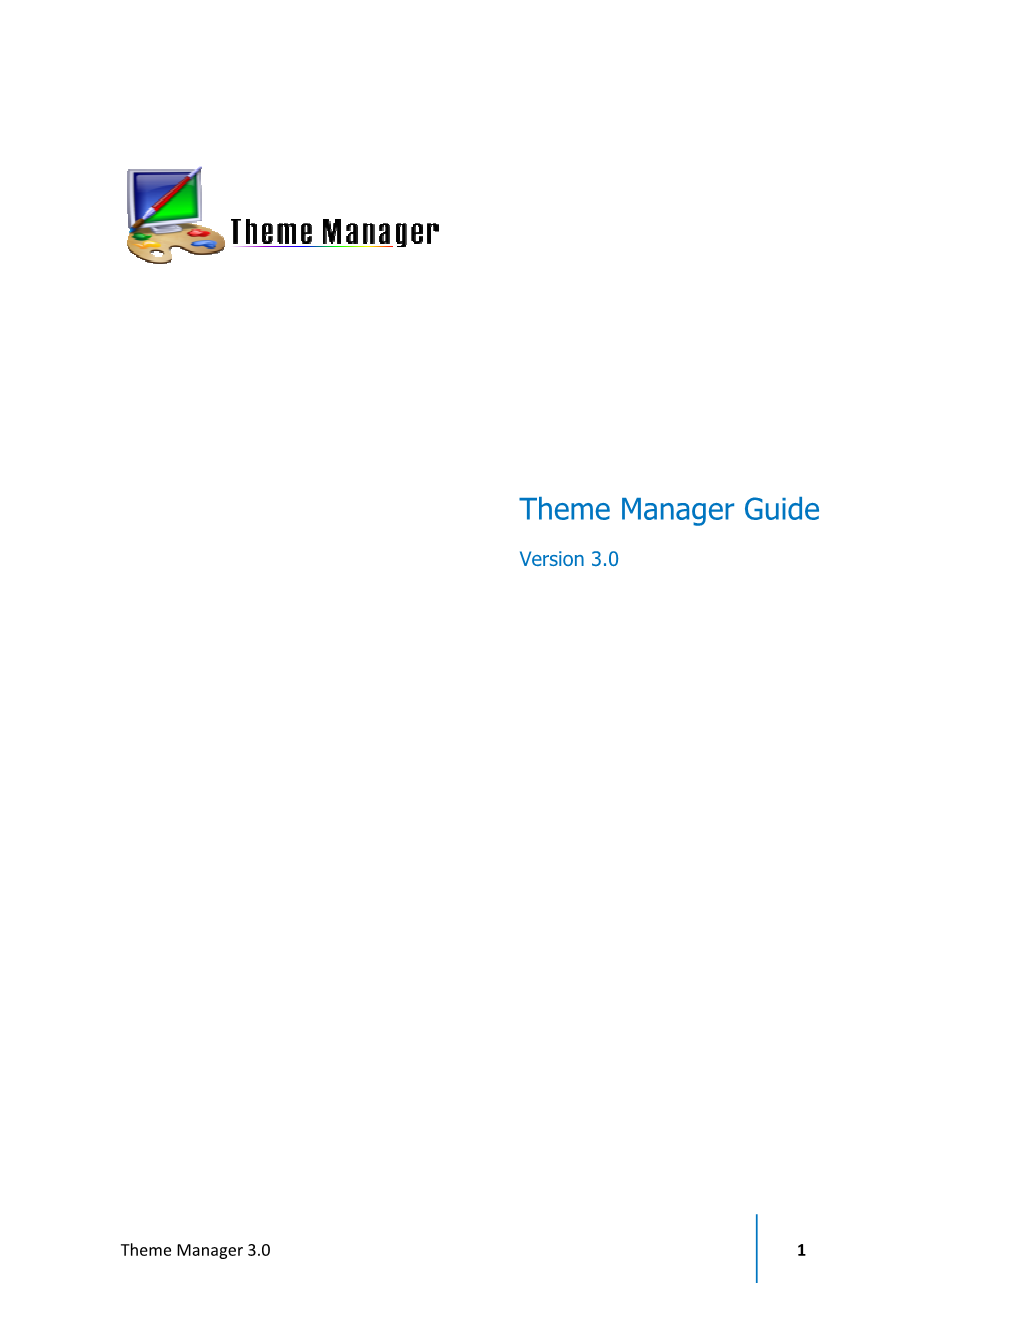 Theme Manager V3.0 Guide